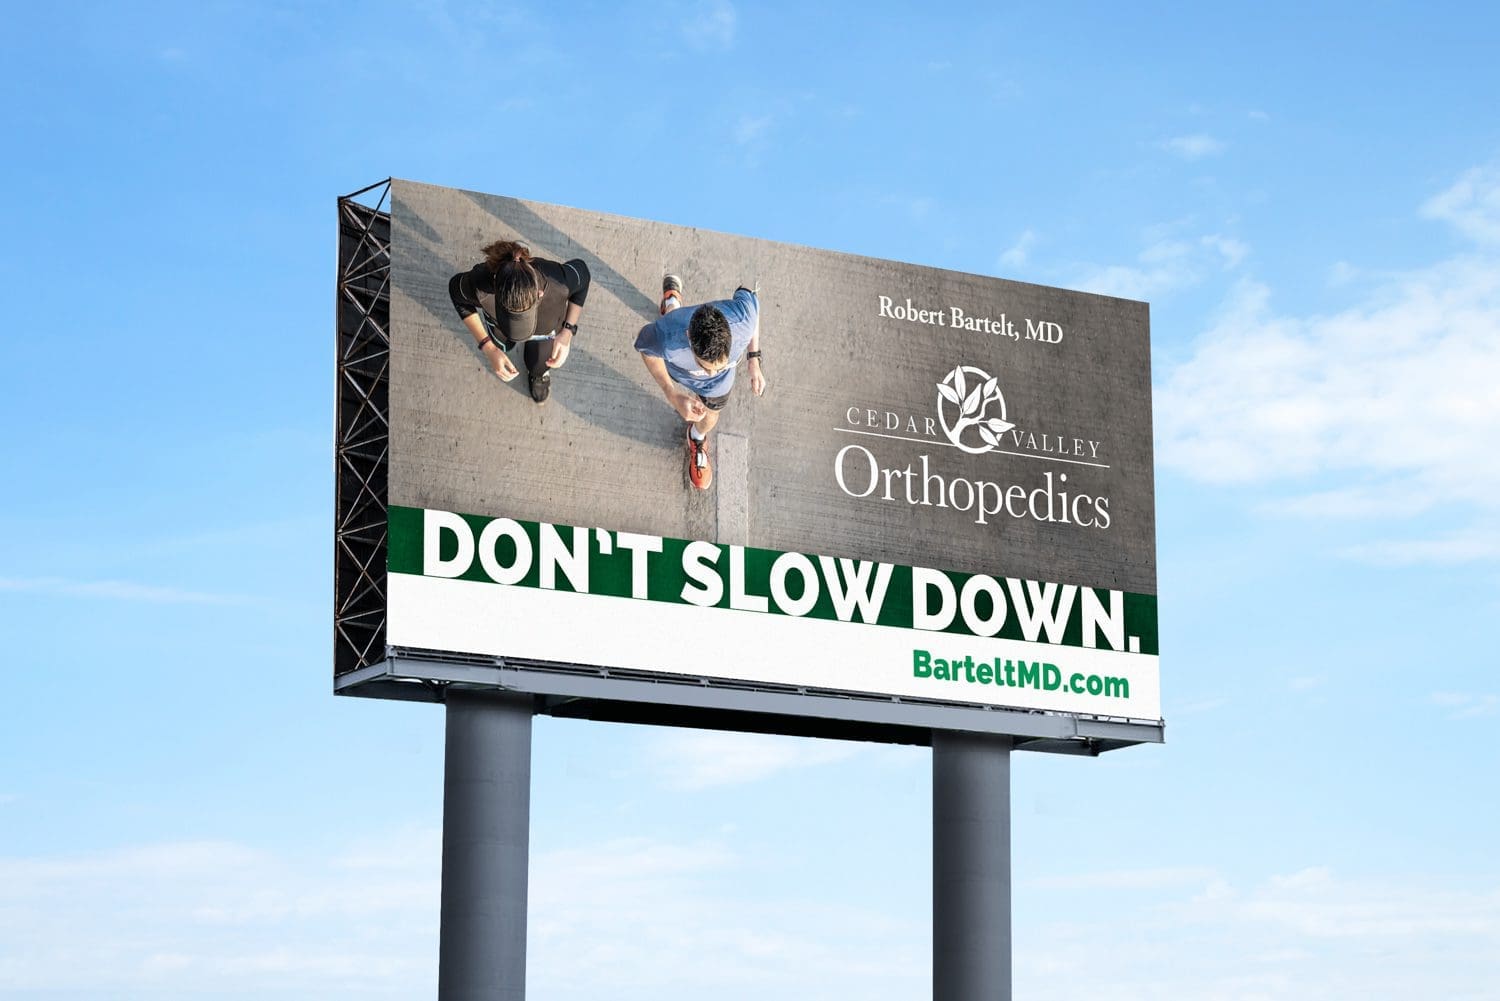 Cedar Valley Orthopedics billboard ad